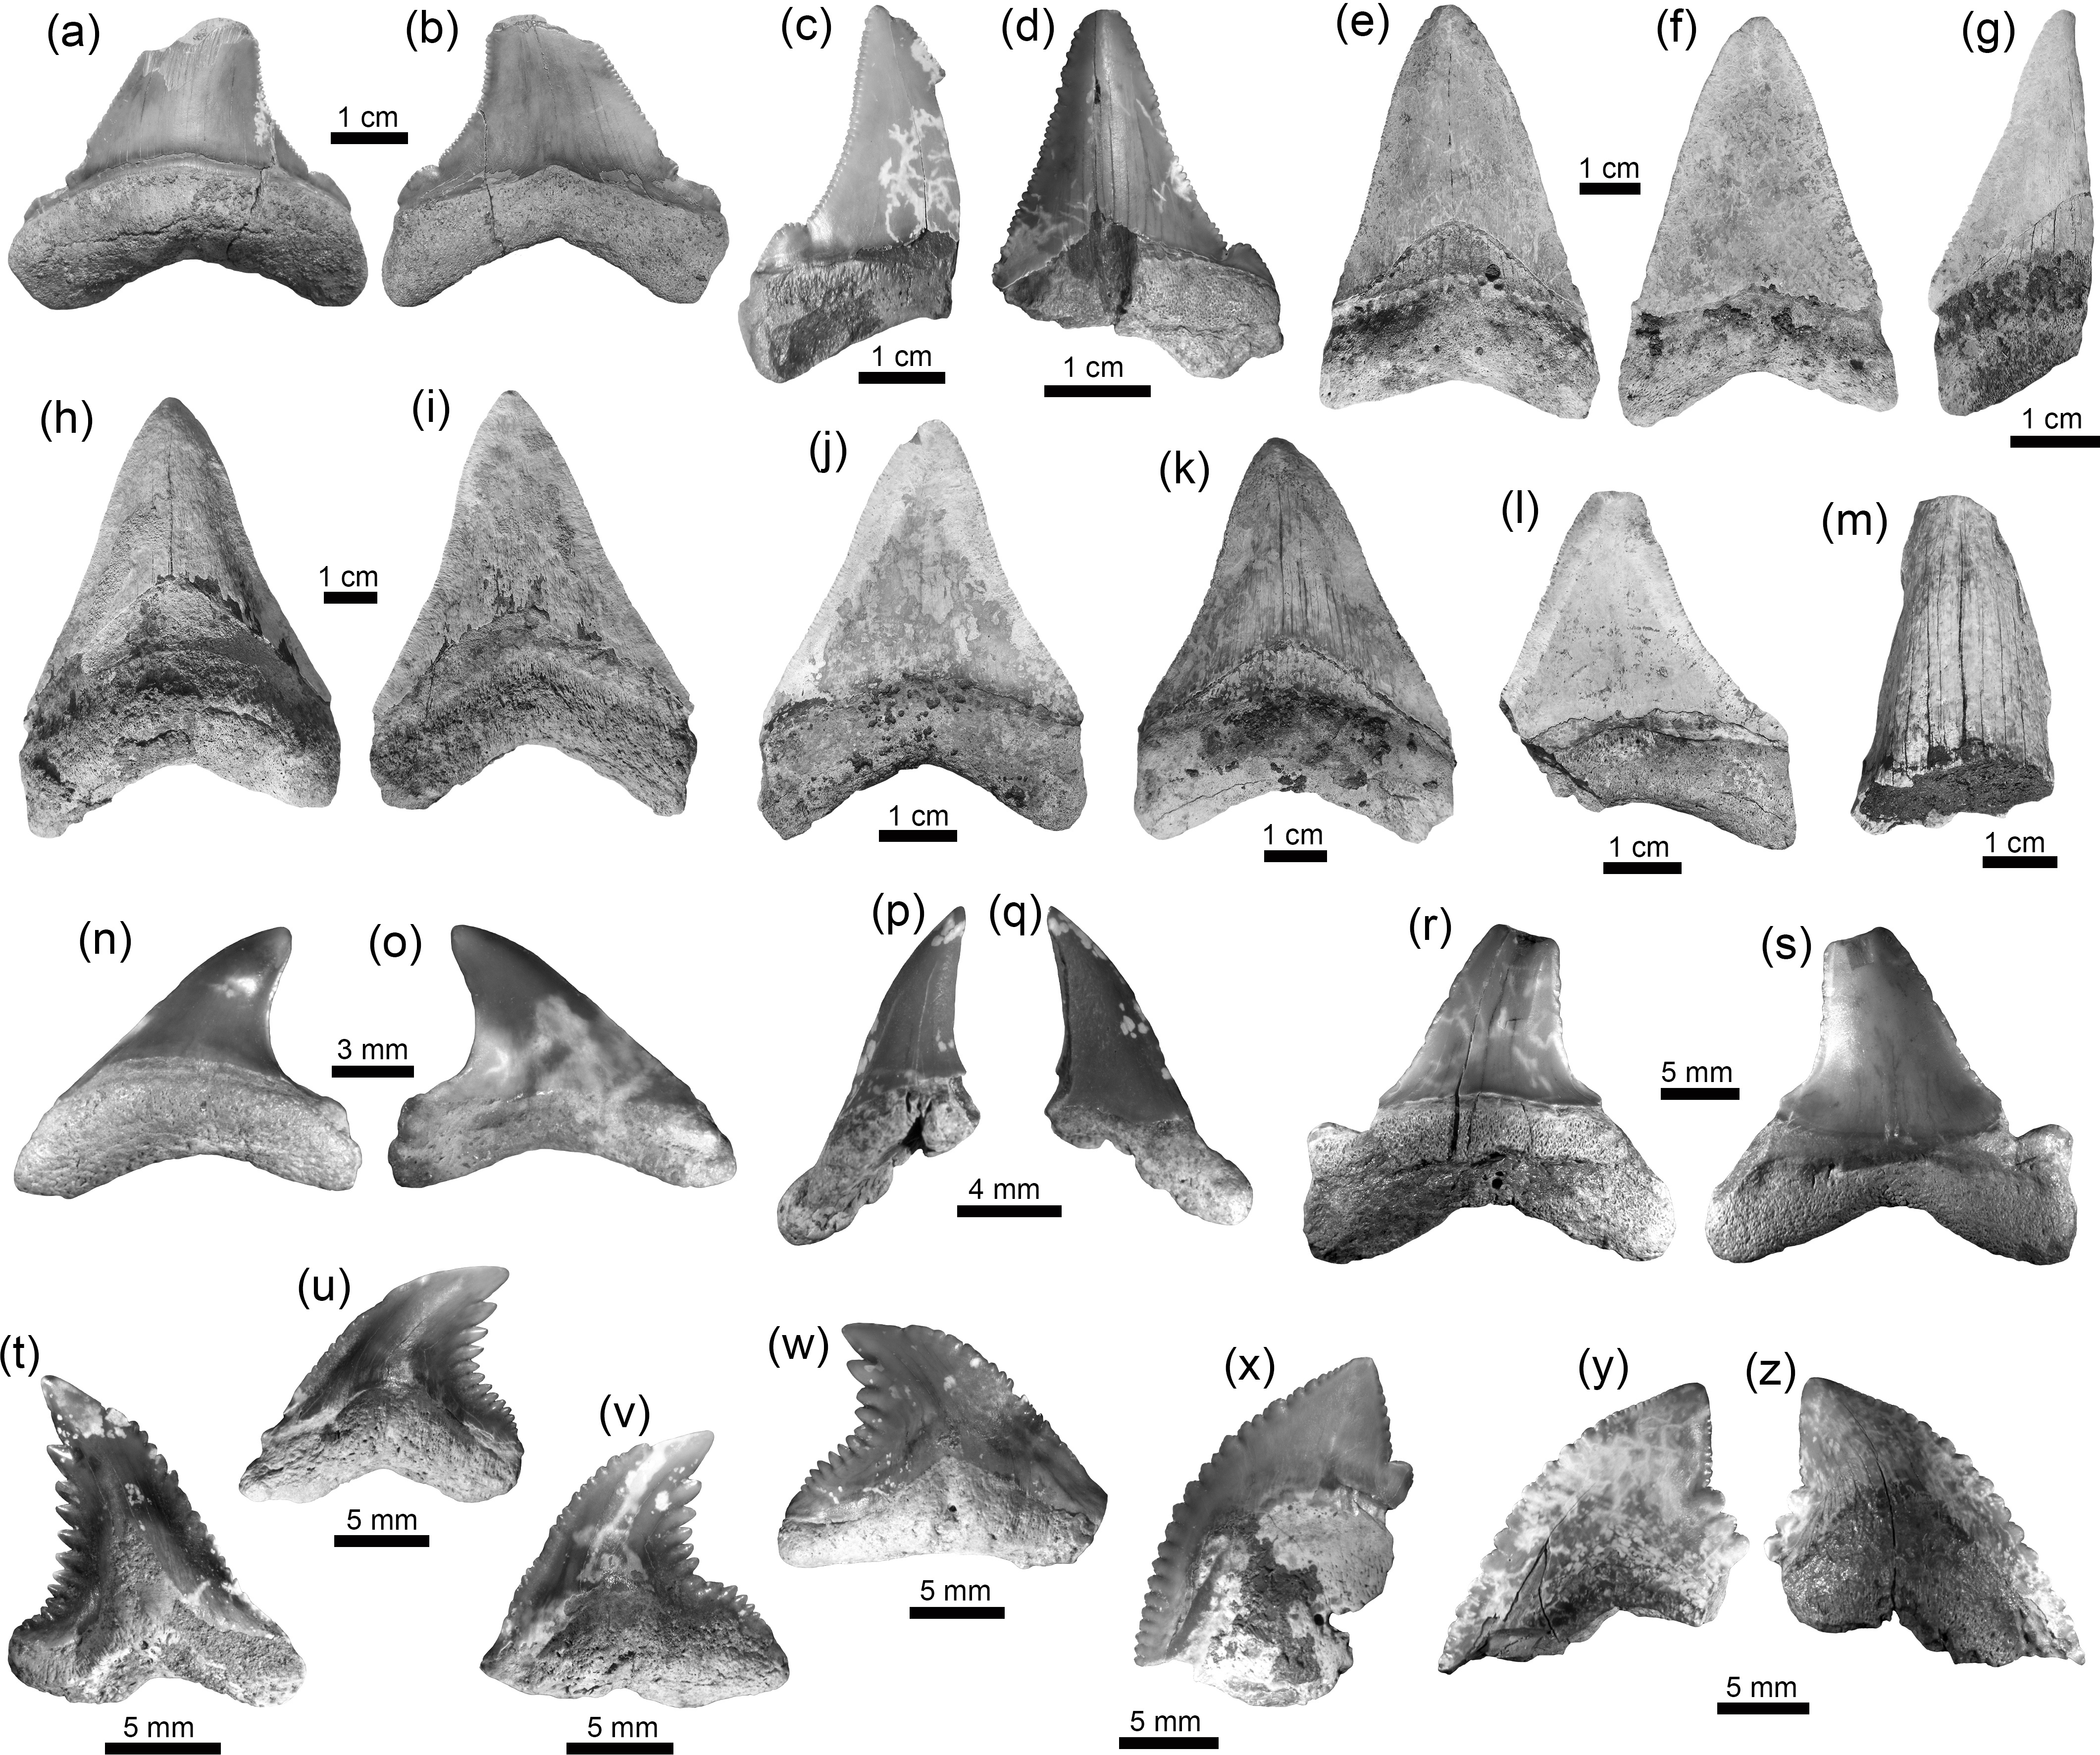 Bg Neogene Caribbean Elasmobranchs Diversity Paleoecology And Paleoenvironmental Significance Of The Cocinetas Basin Assemblage Guajira Peninsula Colombia